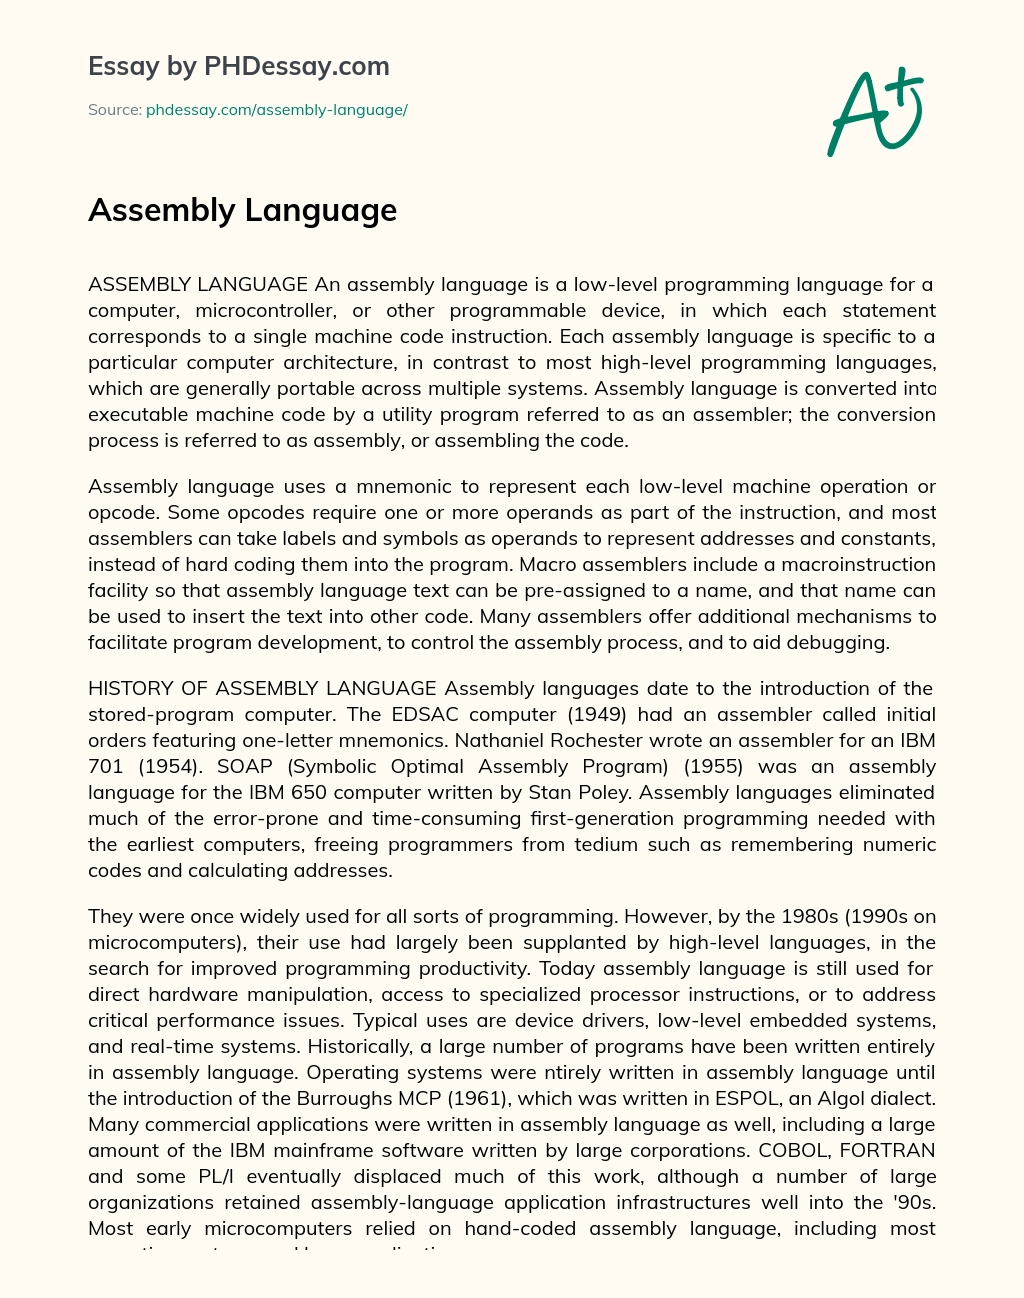 Assembly Language essay